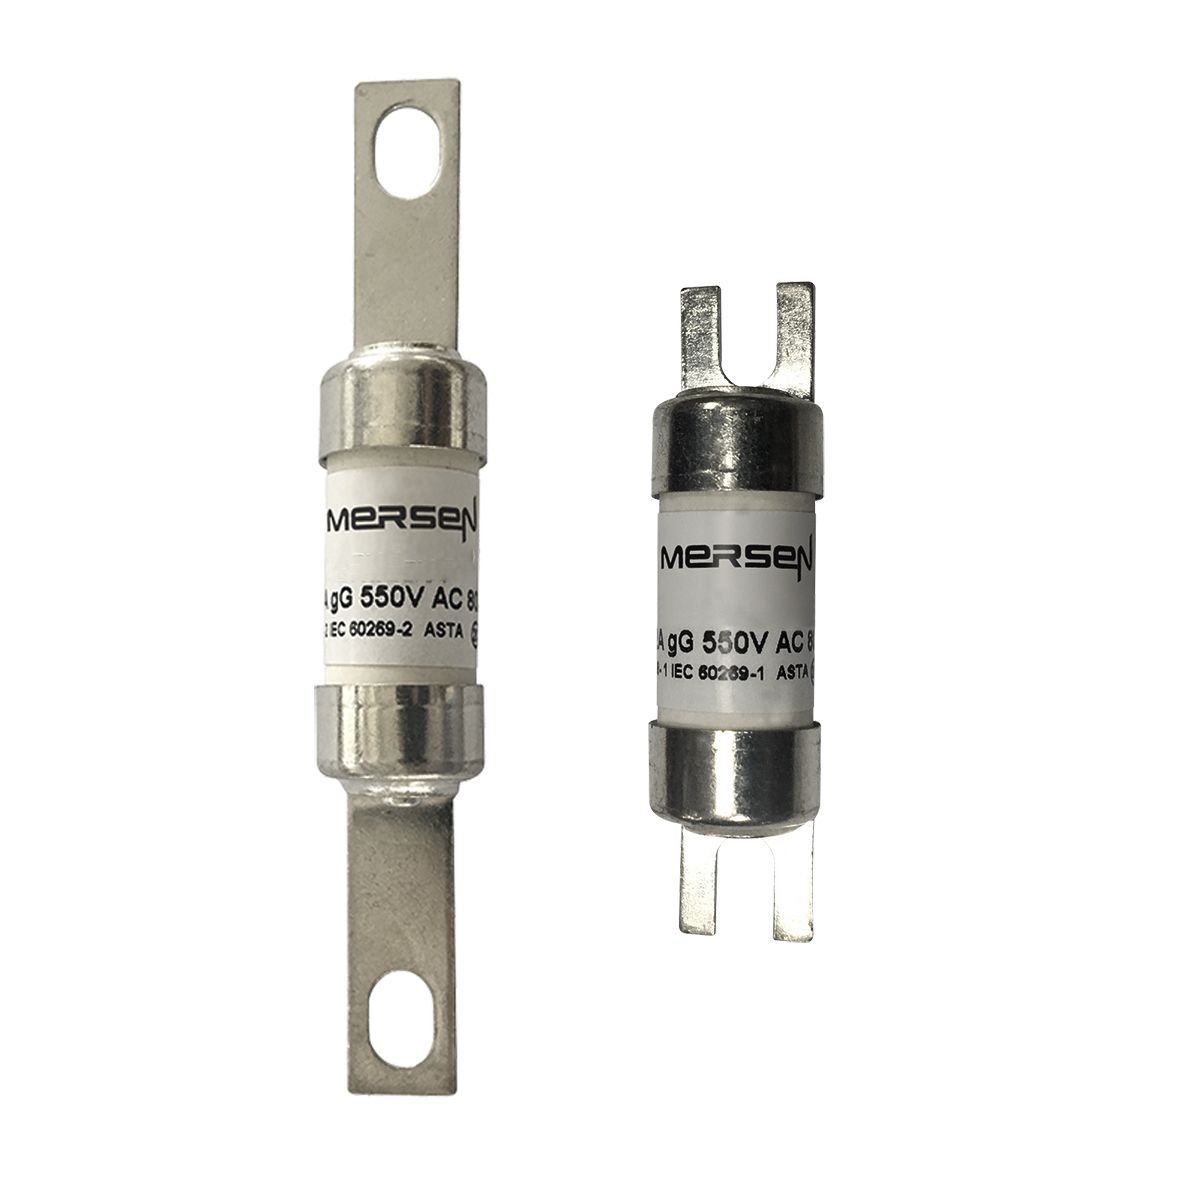 C1019224 - Offset Tag fuse-links gG BNTI 550VAC/250VDC 16A